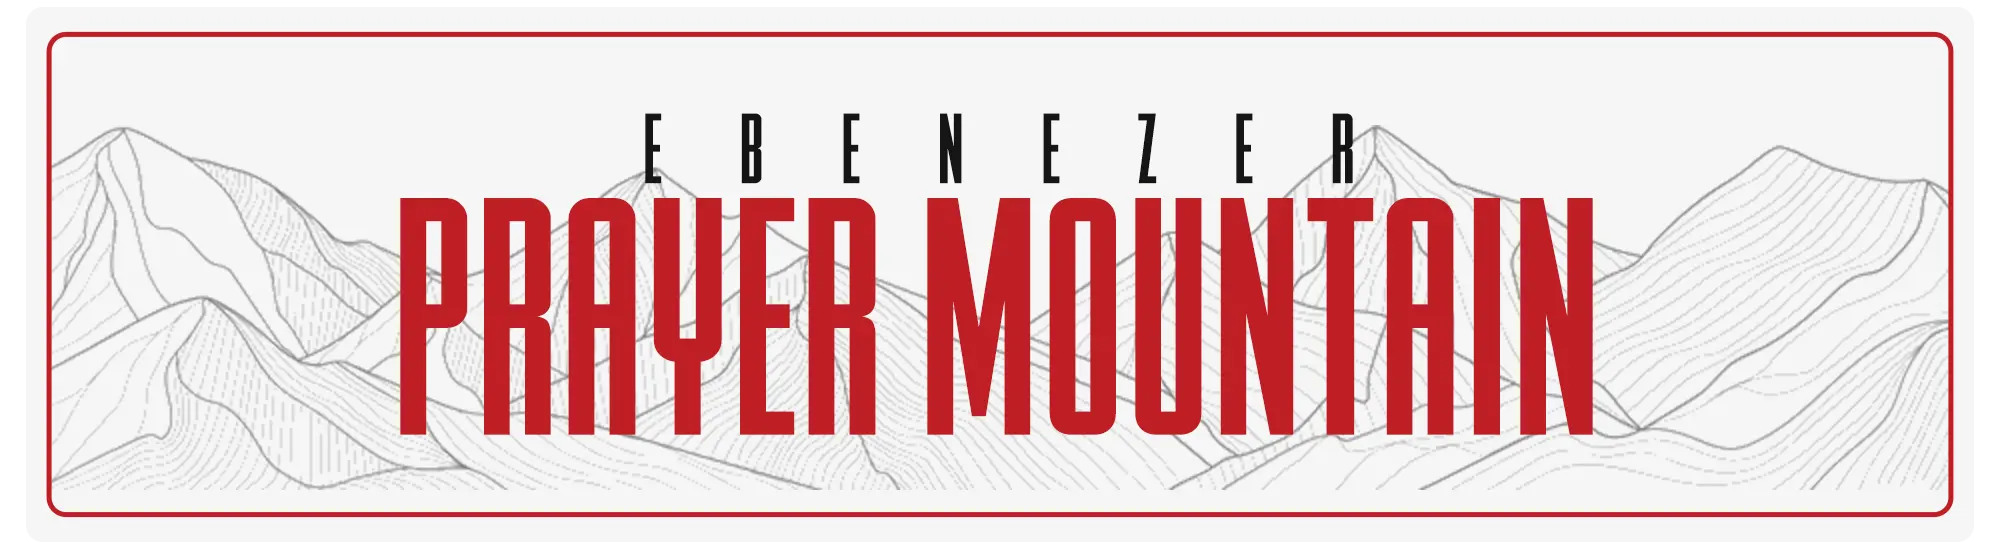 Ebenezer Prayer Mountain Main Banner